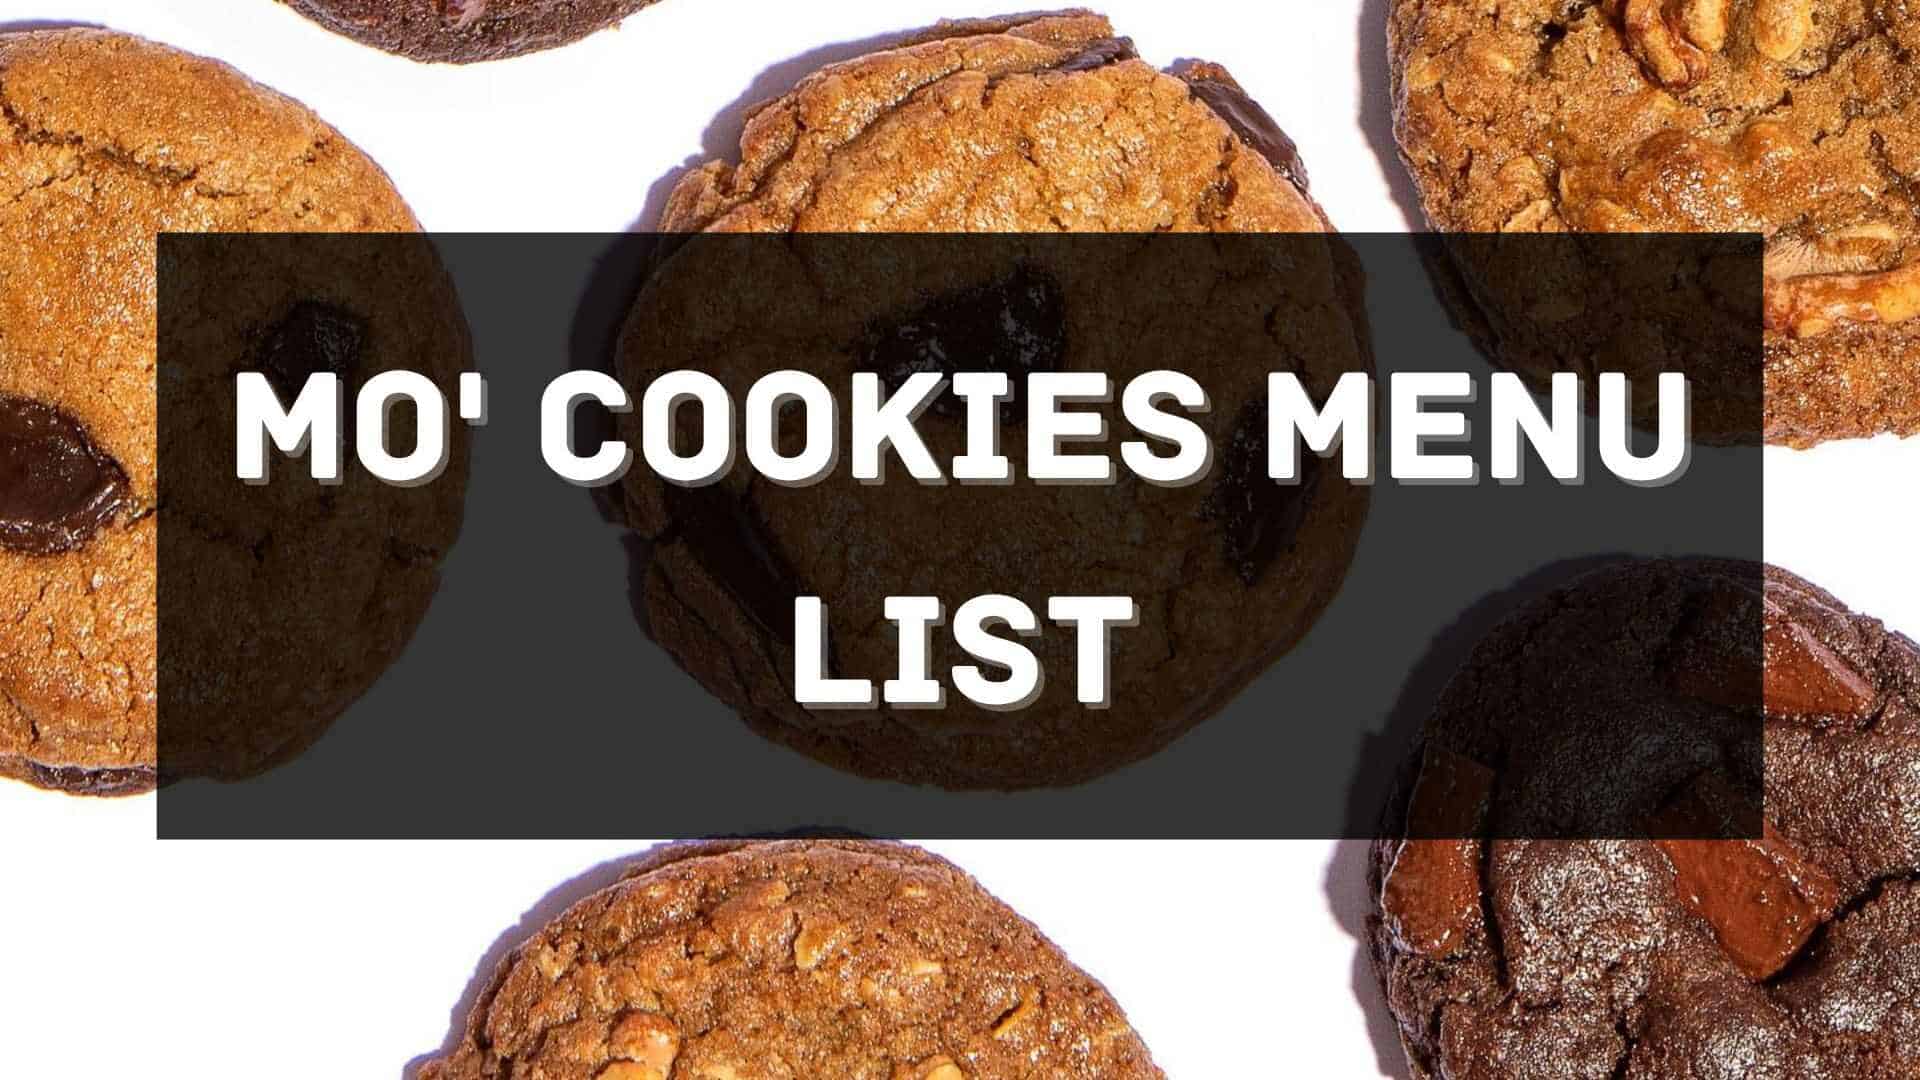 mo' cookies menu prices philippines